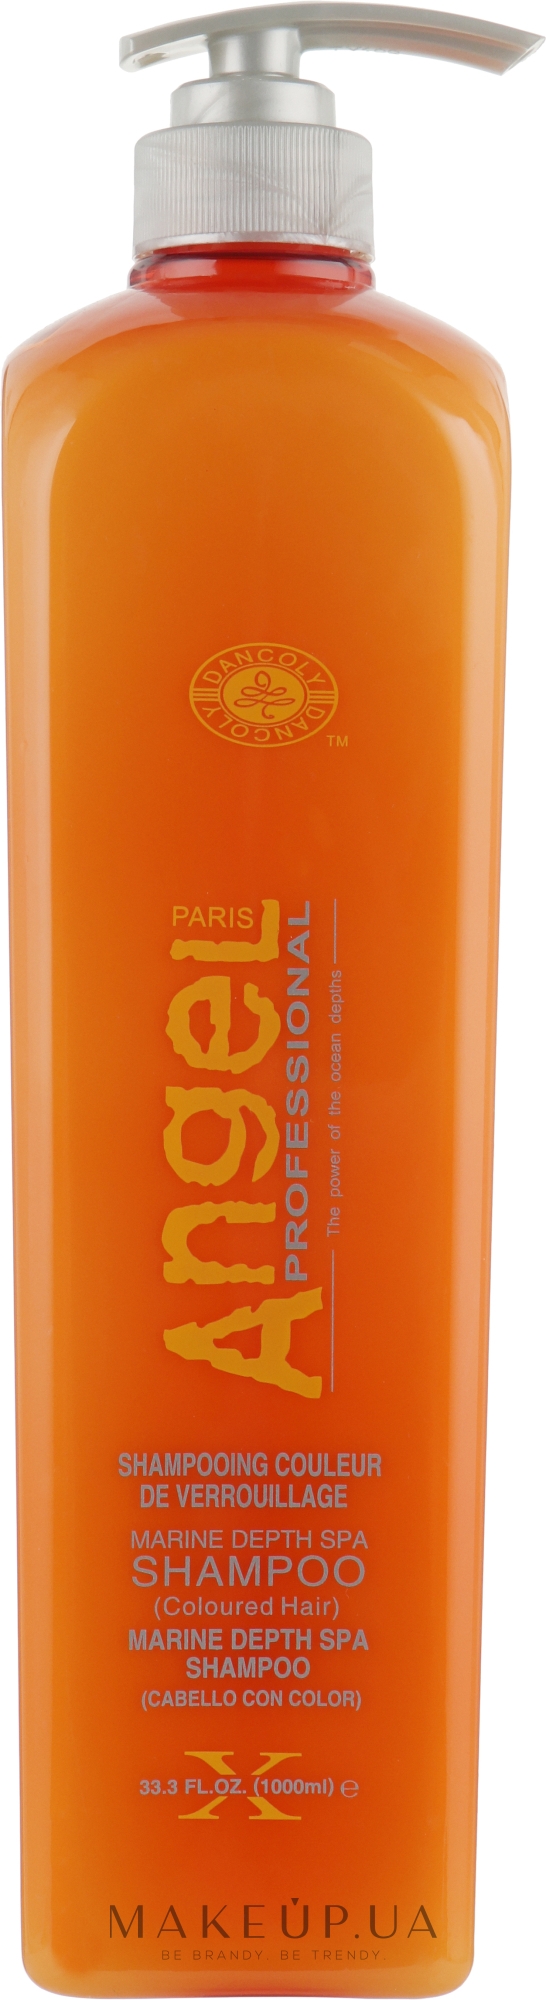 Шампунь для окрашенных волос - Angel Professional Paris Colored Hair Shampoo — фото 1000ml